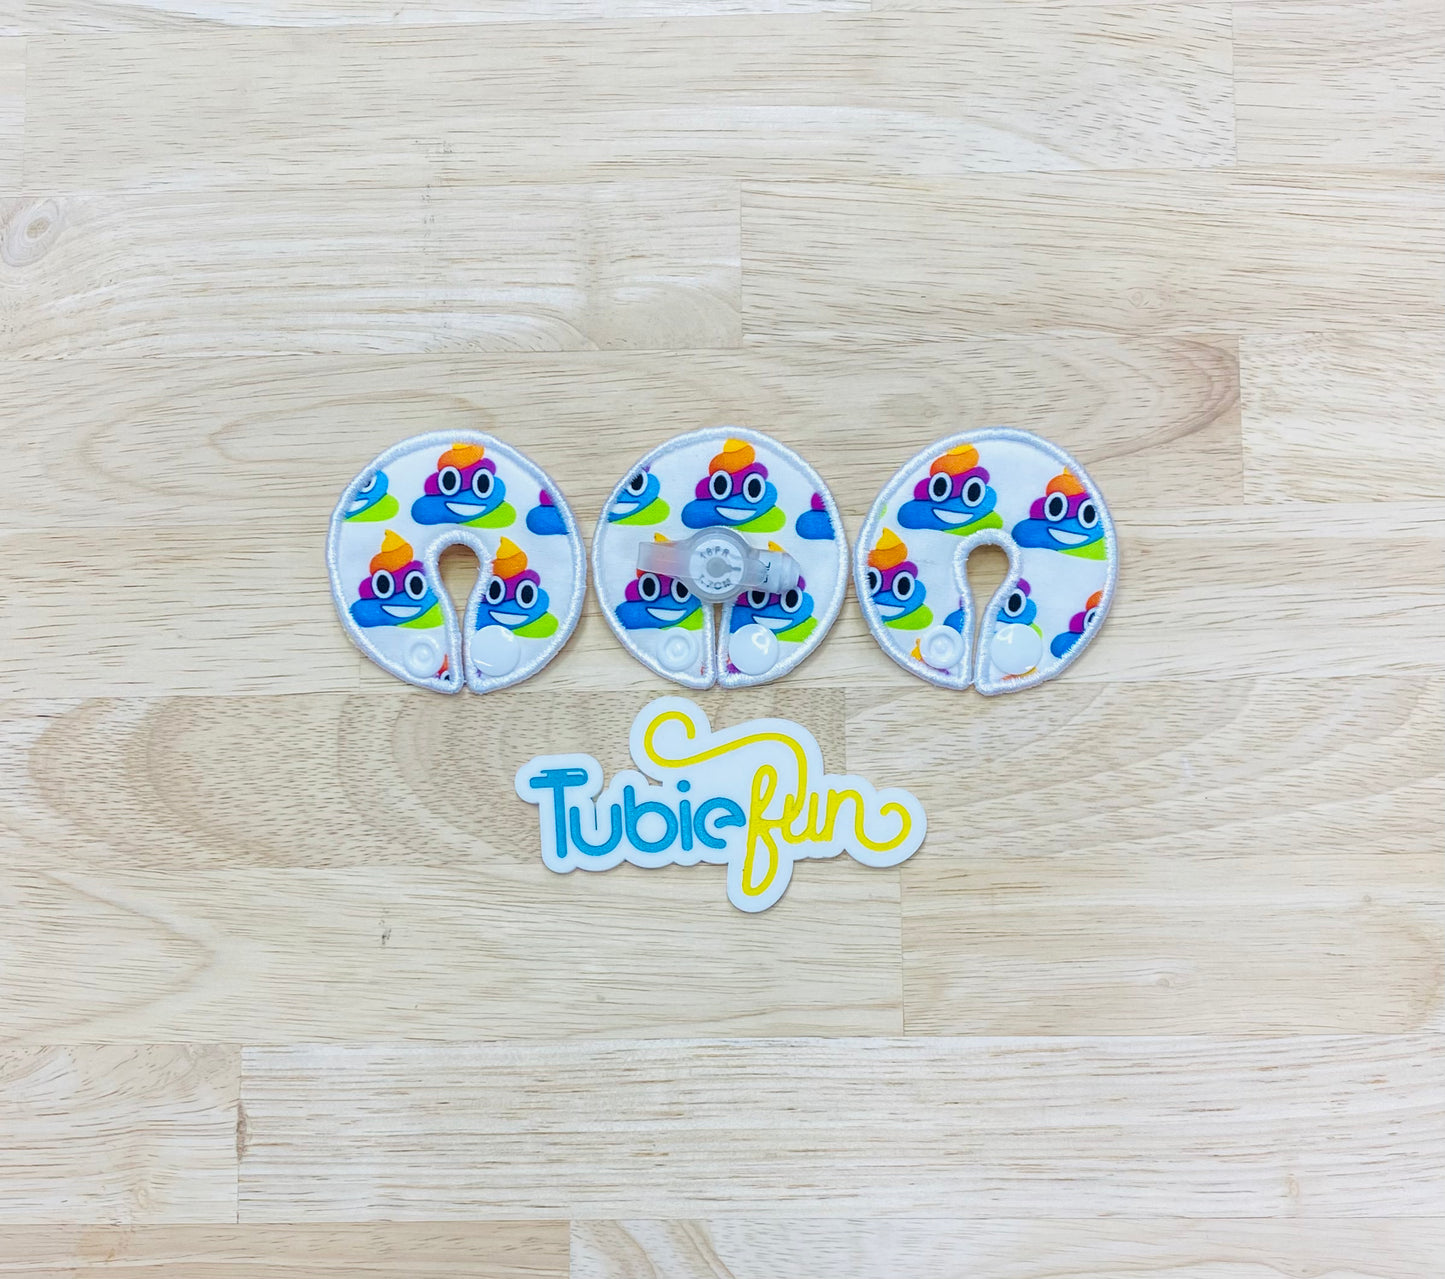 G-Tube Button Pad Cover - Rainbow Poo Emoji